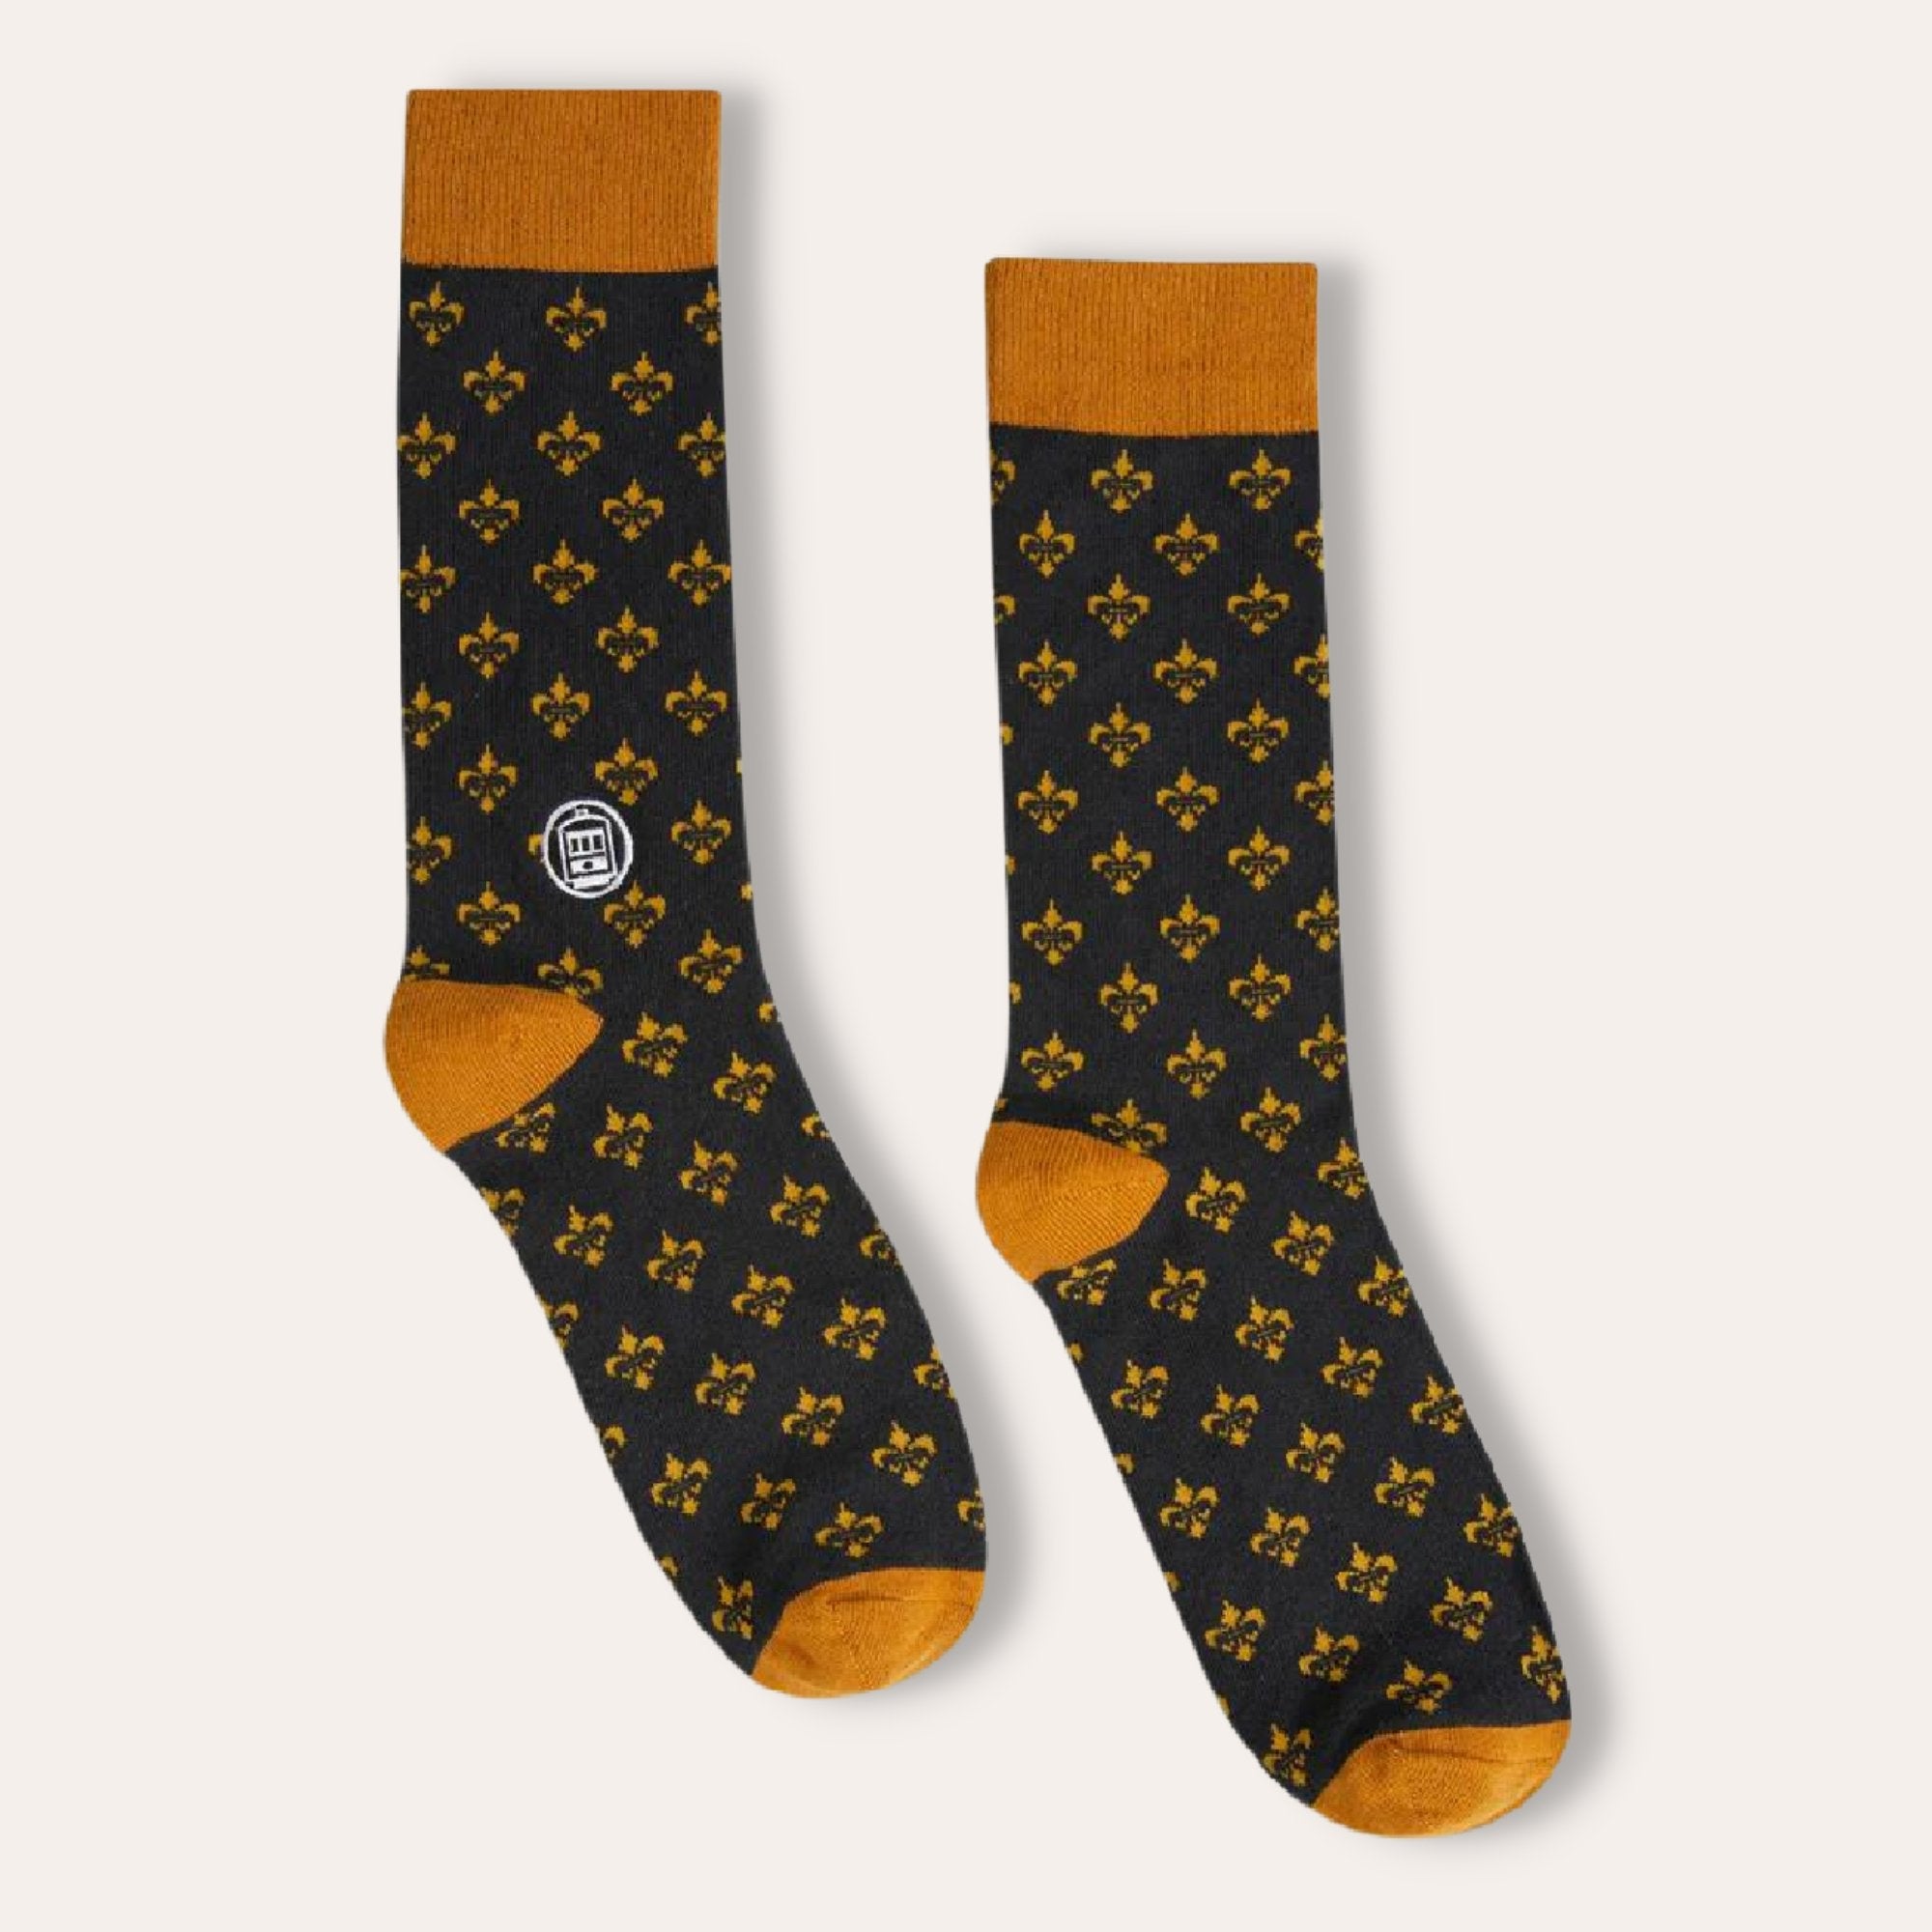 Bonfolk Socks - Black and Gold Fleur de Lis